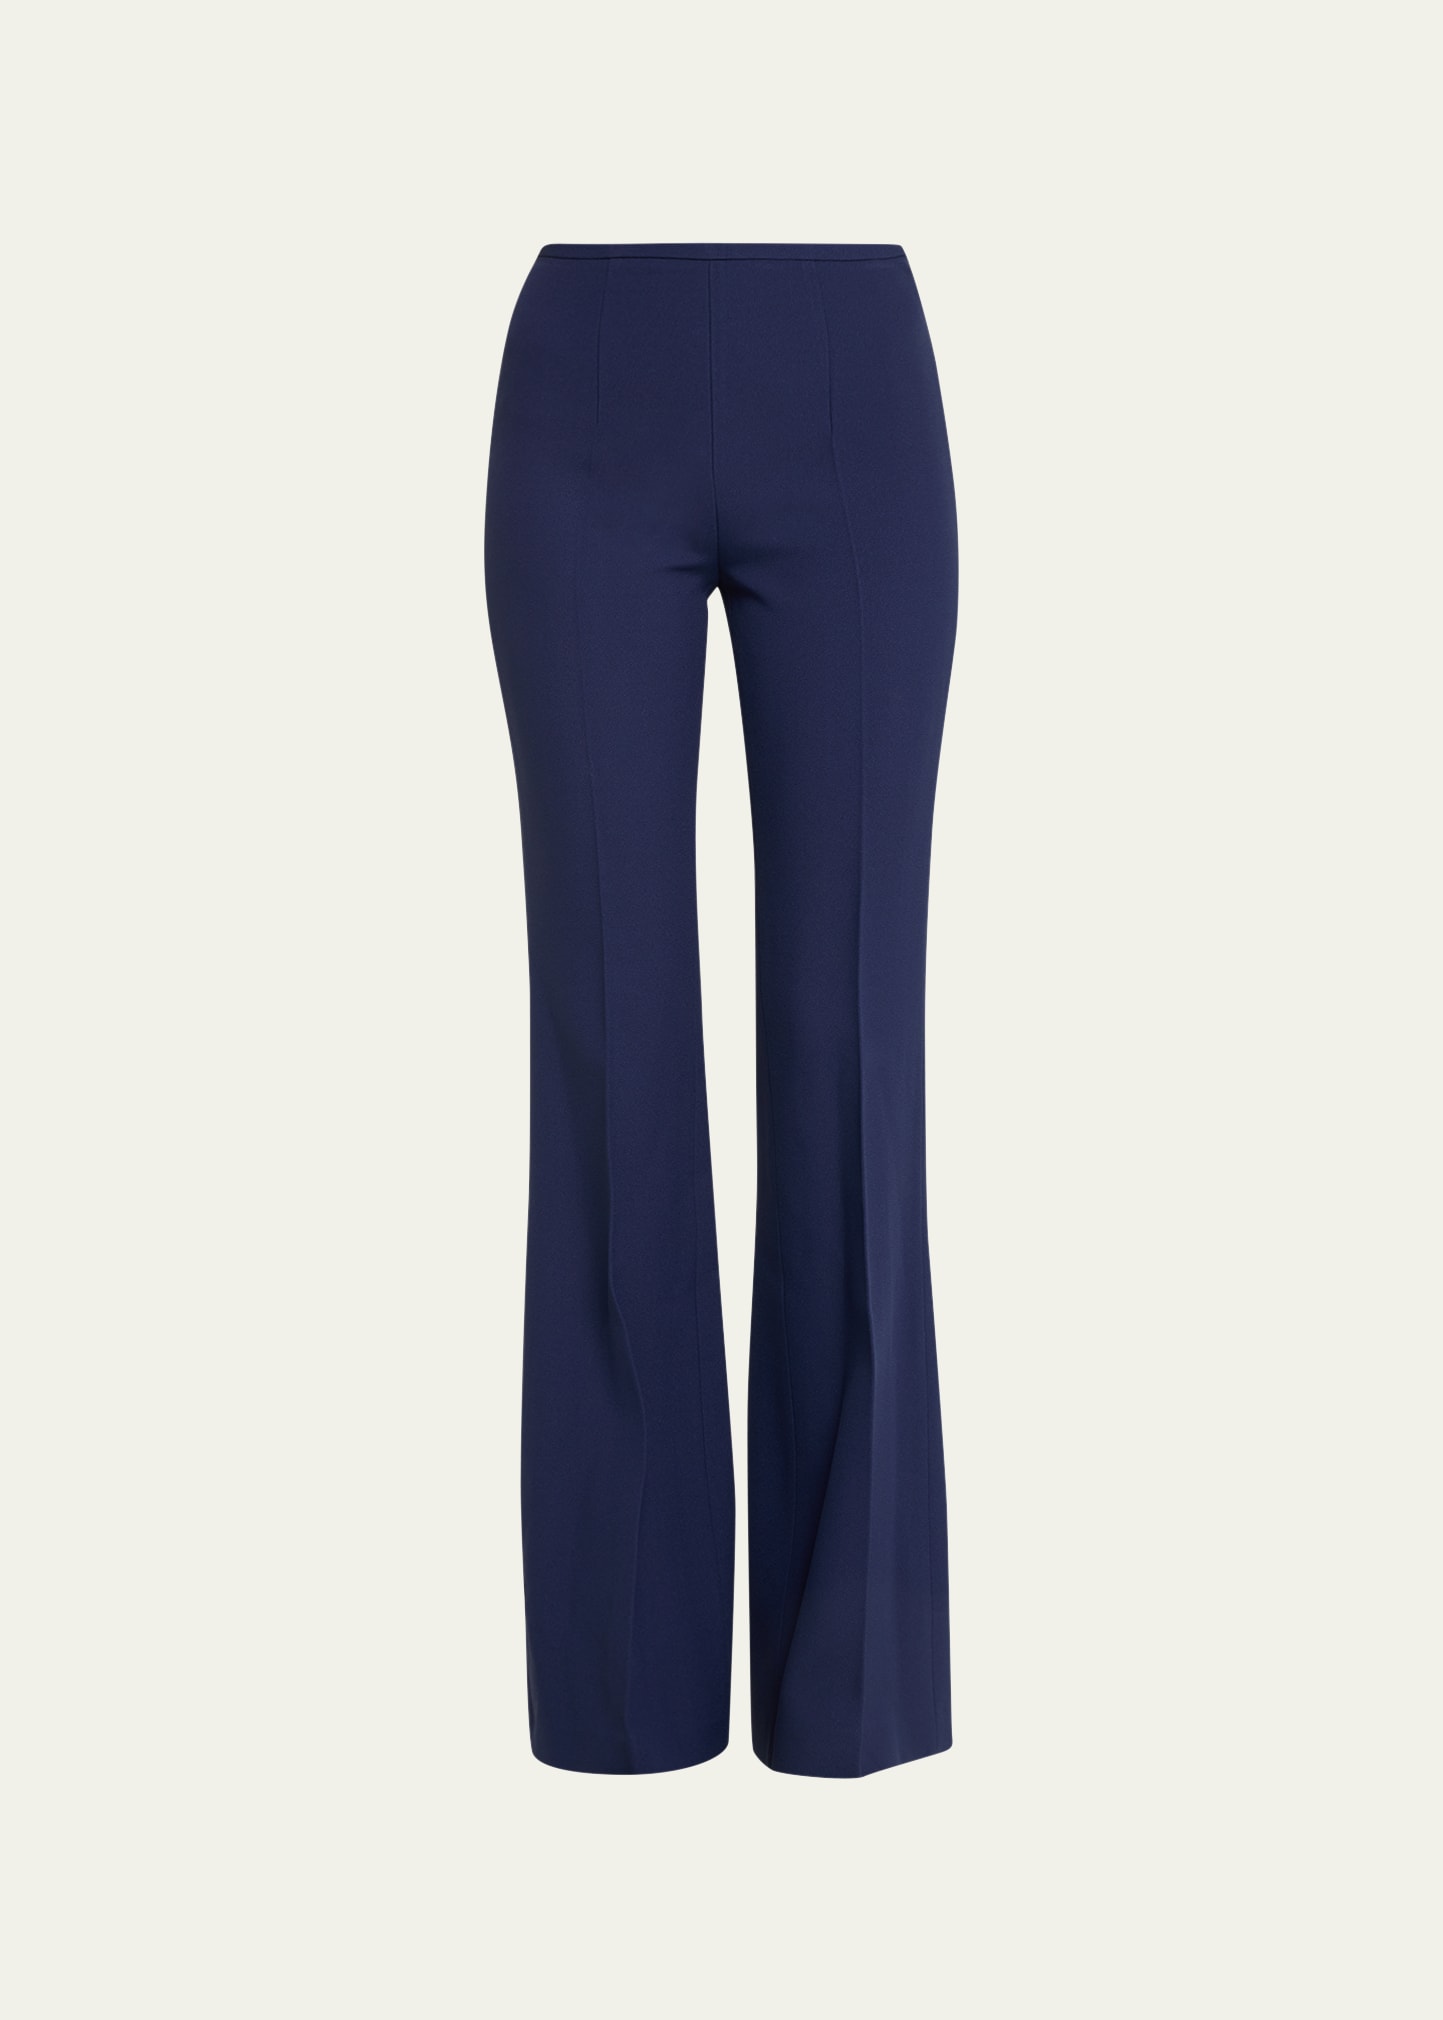 Michael Kors Collection Brooke Side-Zip Flare Pants